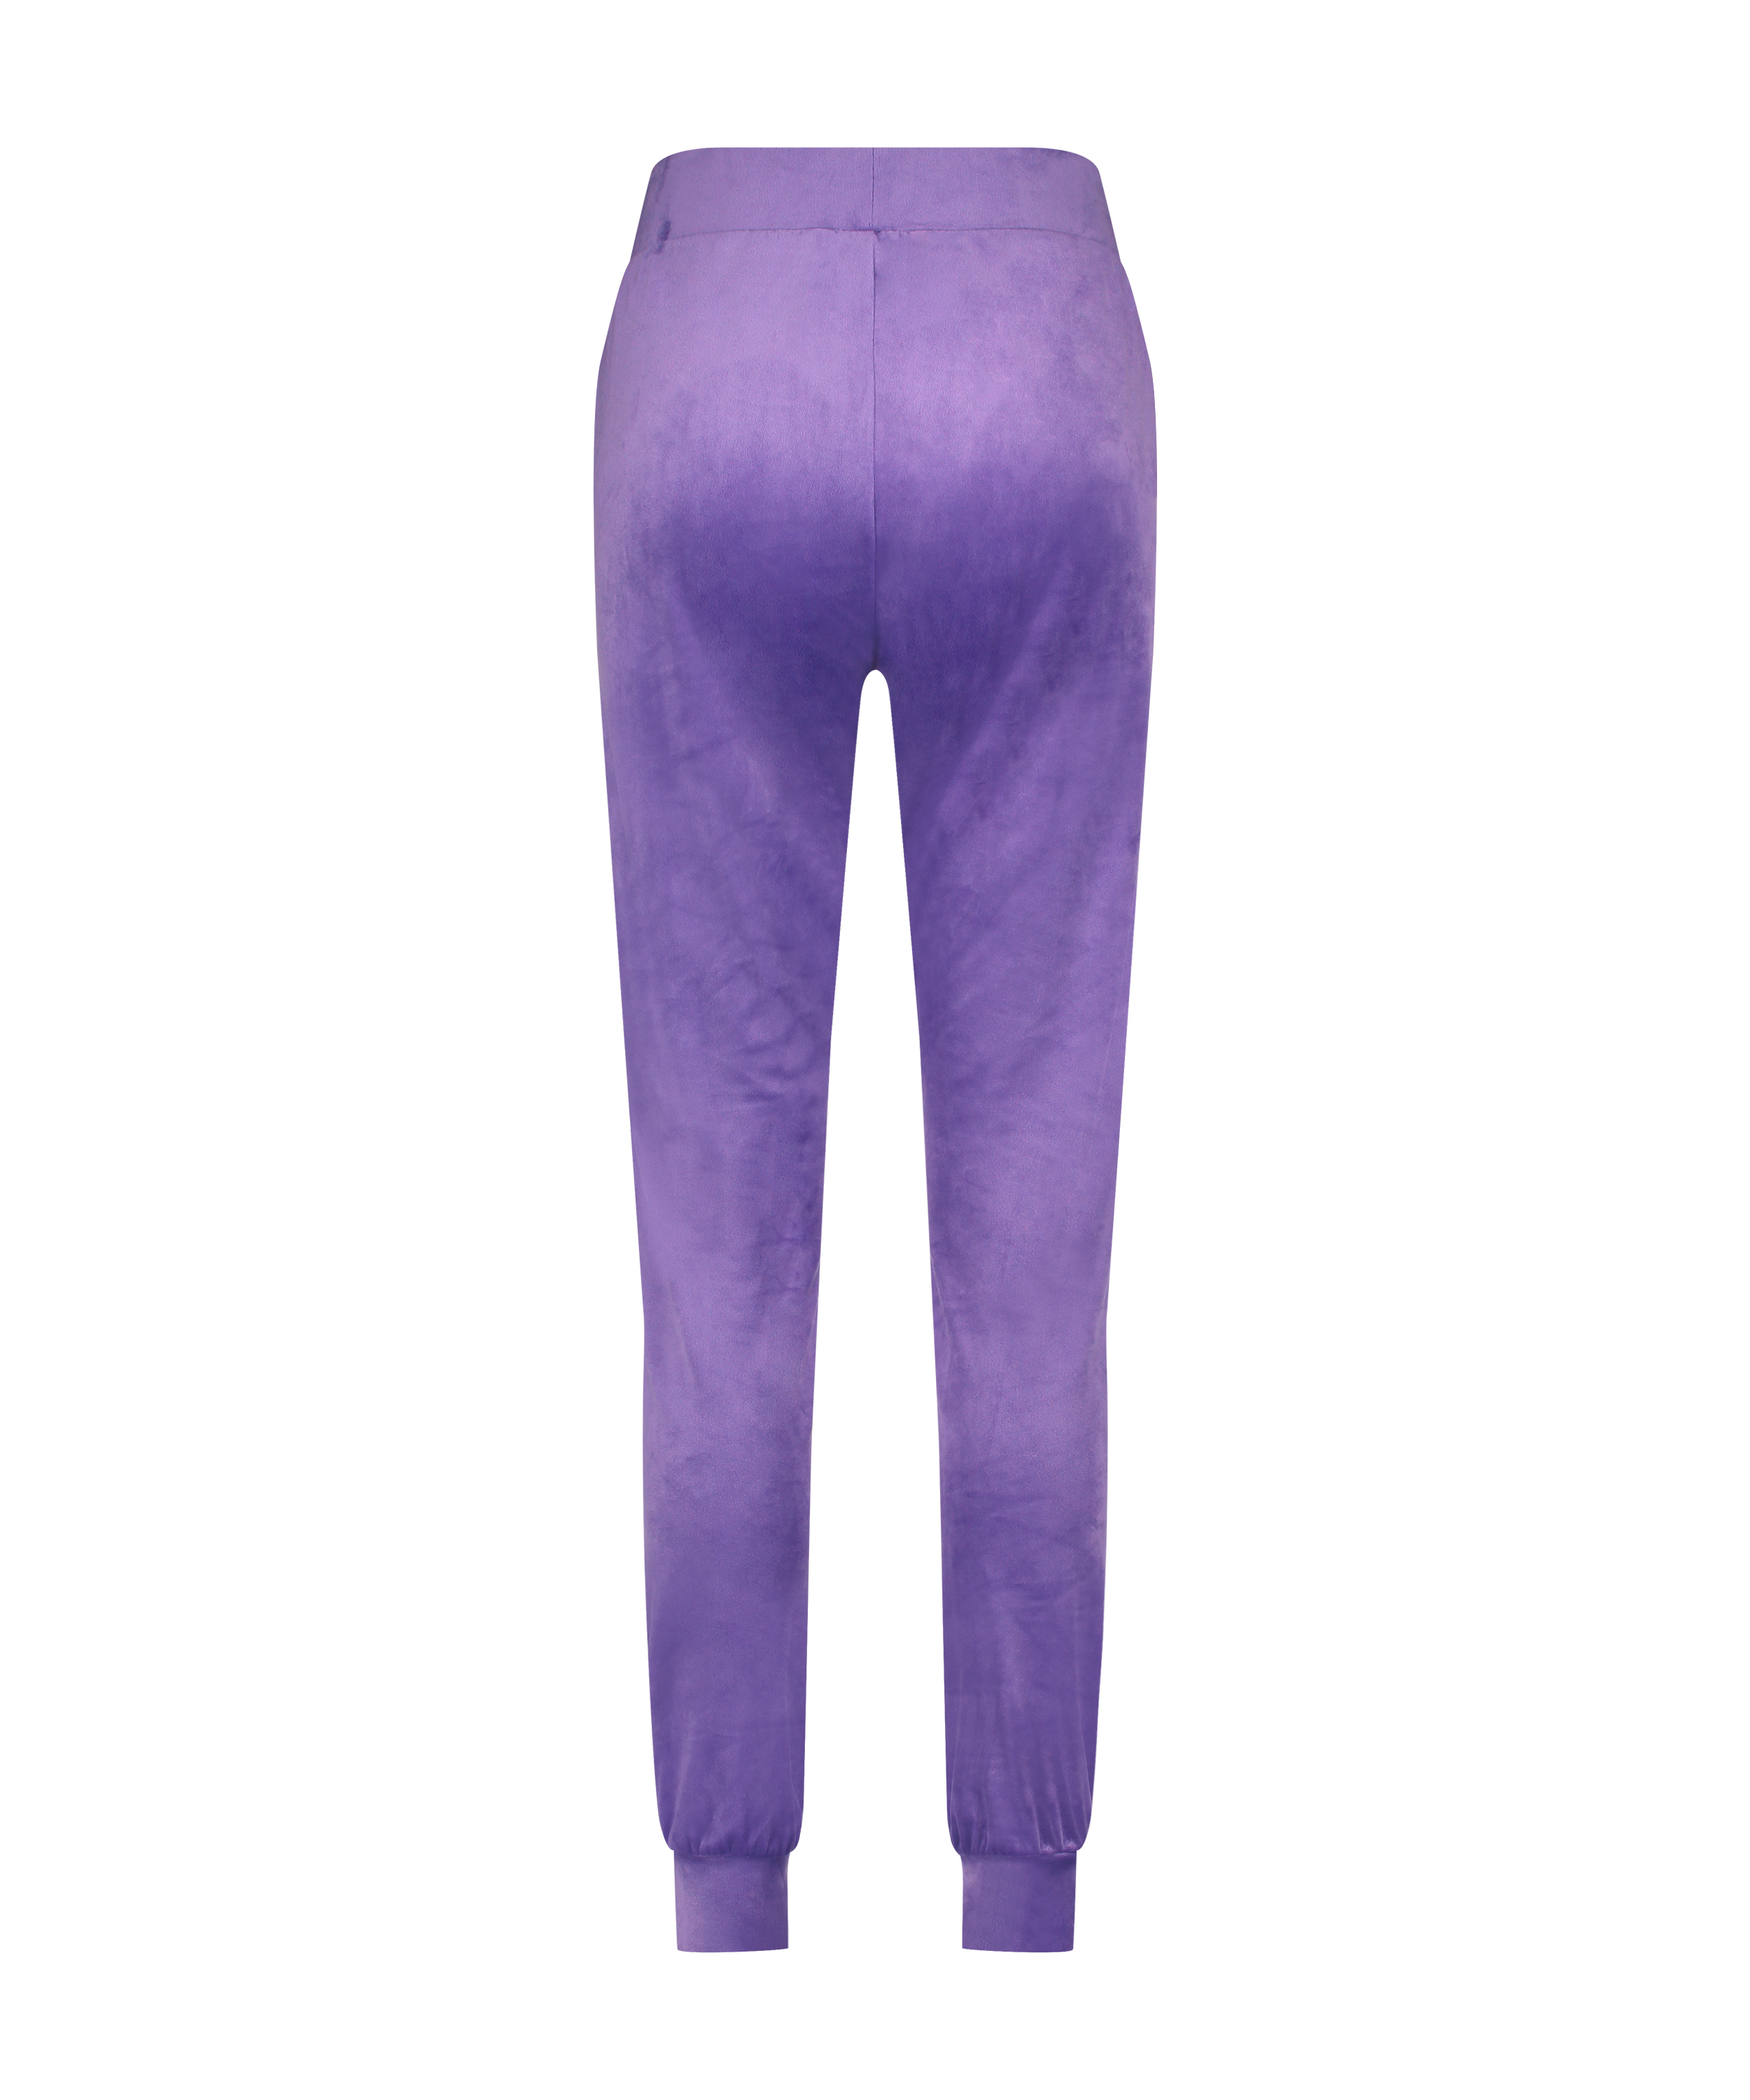 Velours Jogging Pants, Purple, main